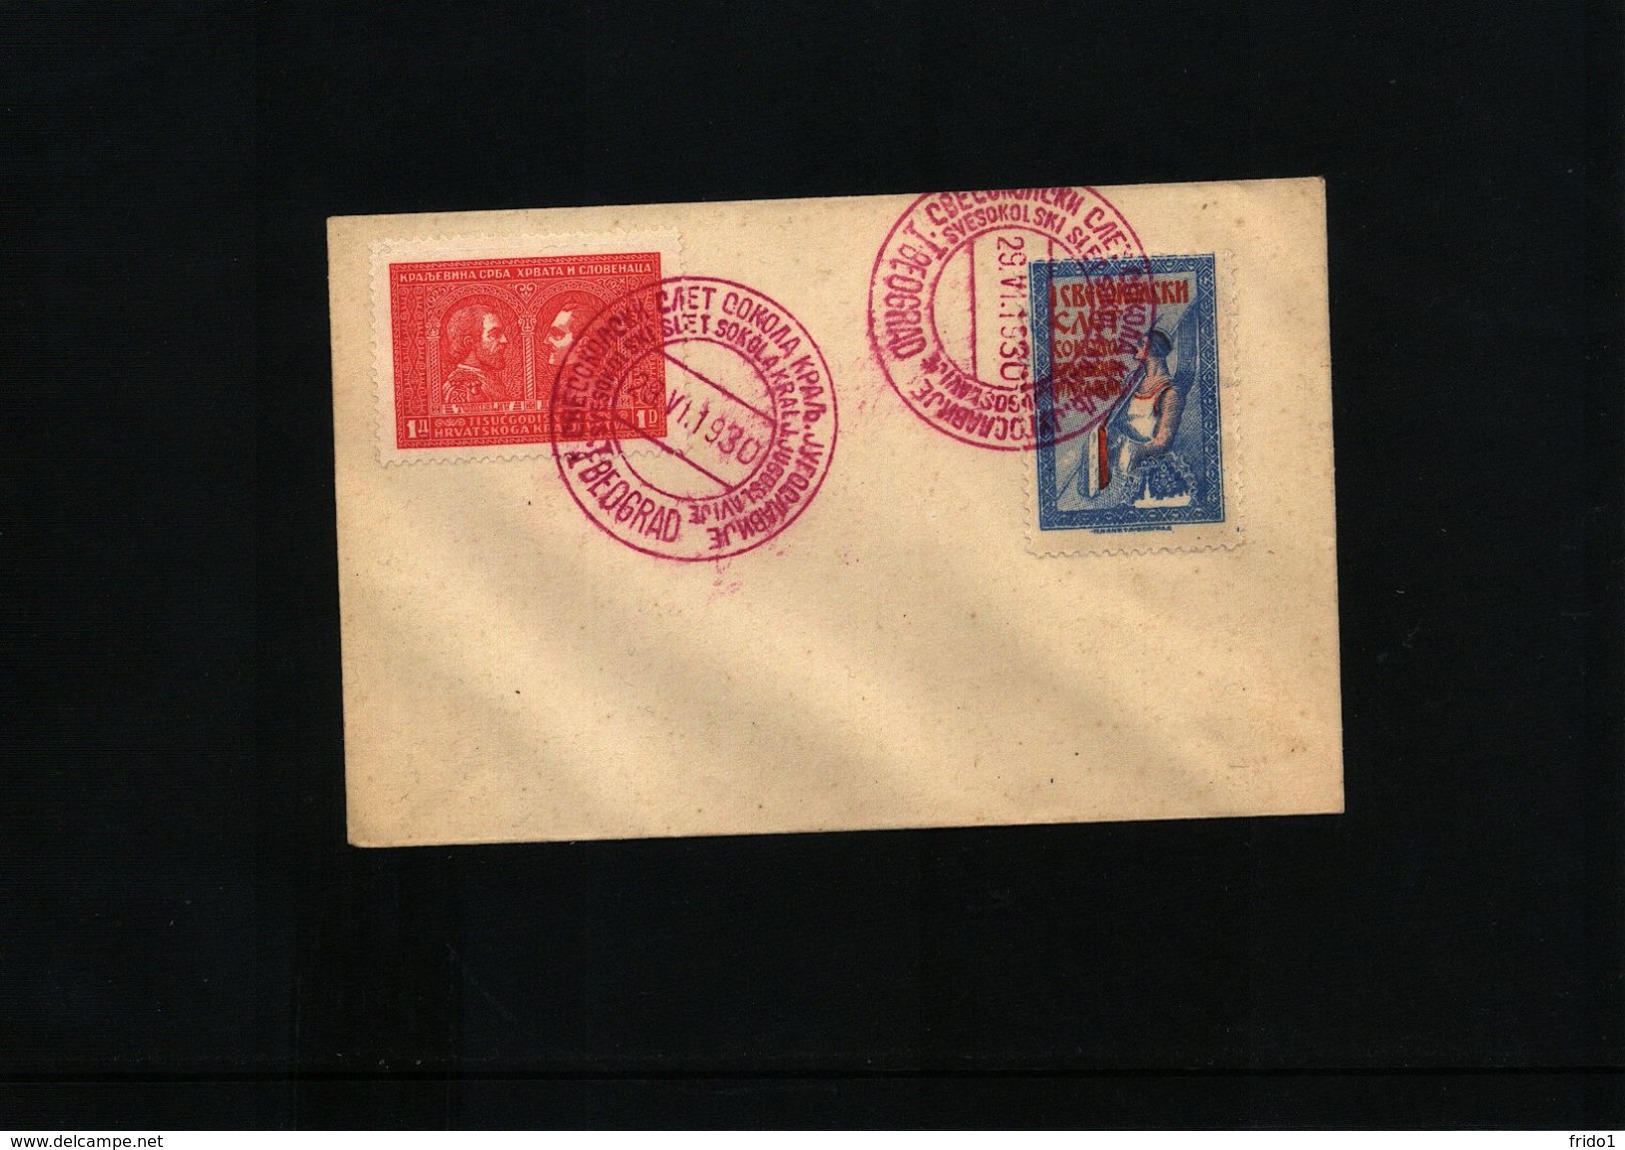 Yugoslavia 1930 Beograd Sokol Meeting Interesting Postmark With Scarce Label - Briefe U. Dokumente